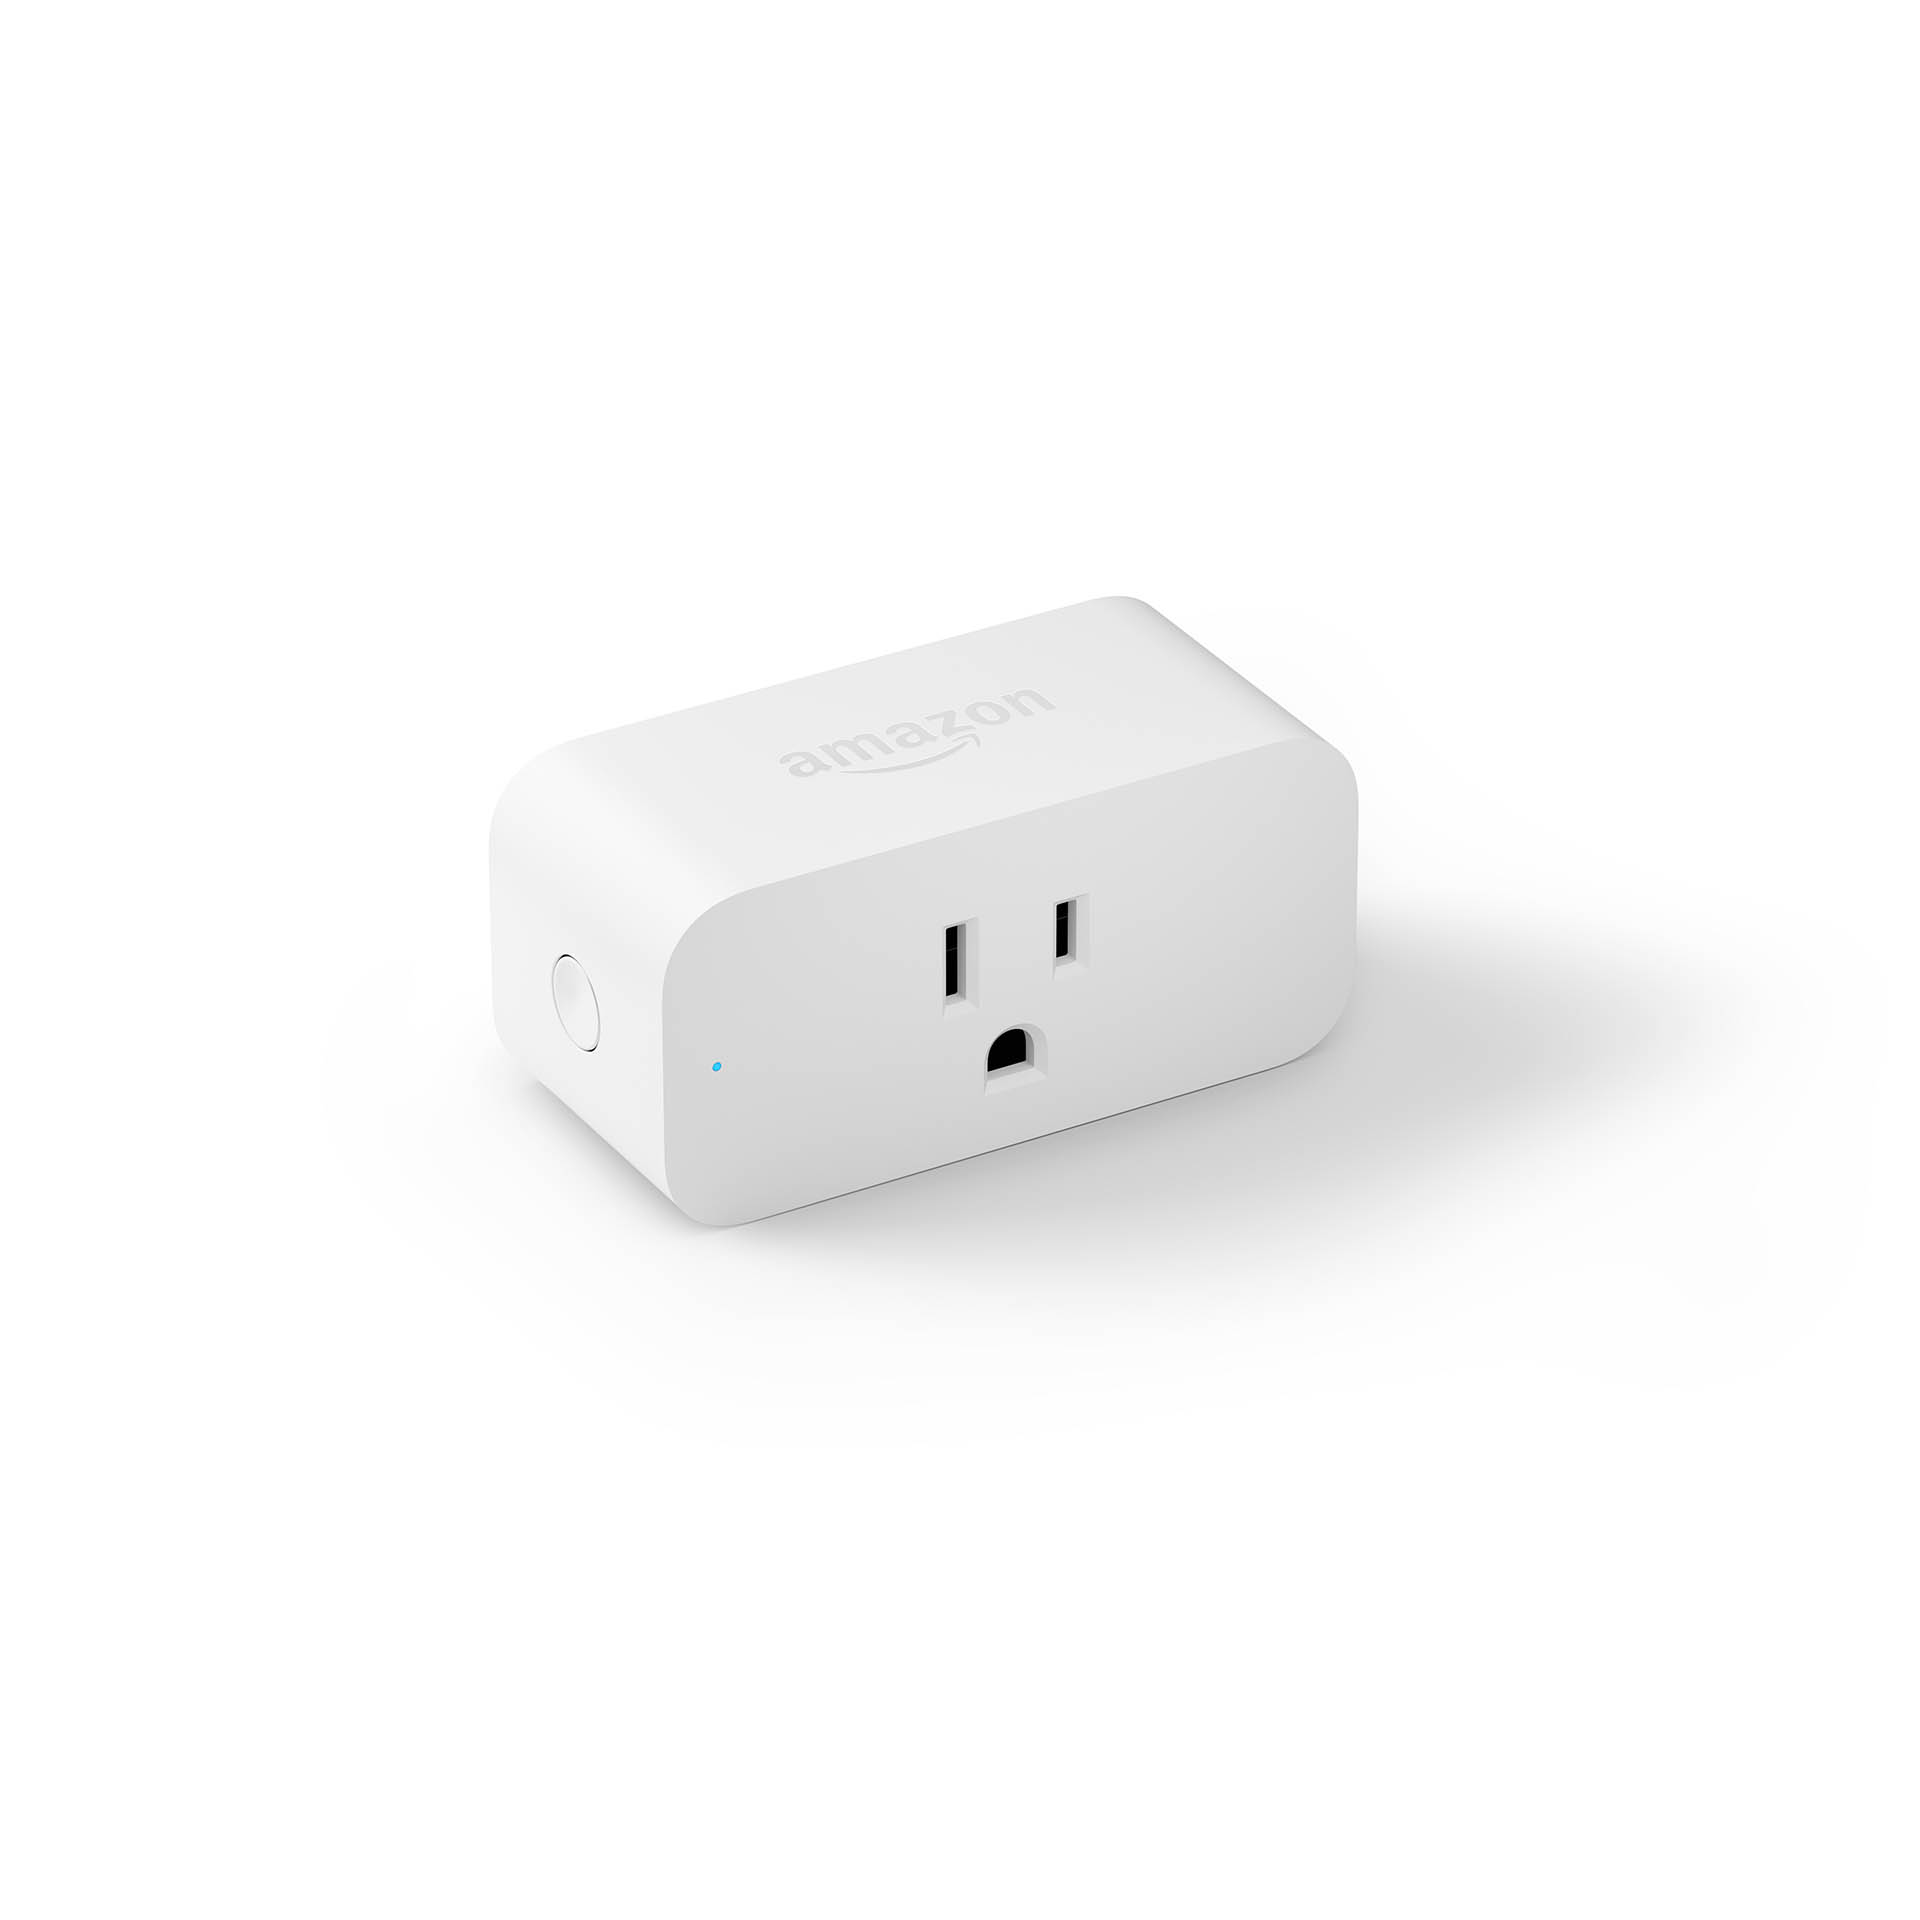 Amazon Smart Plug product image